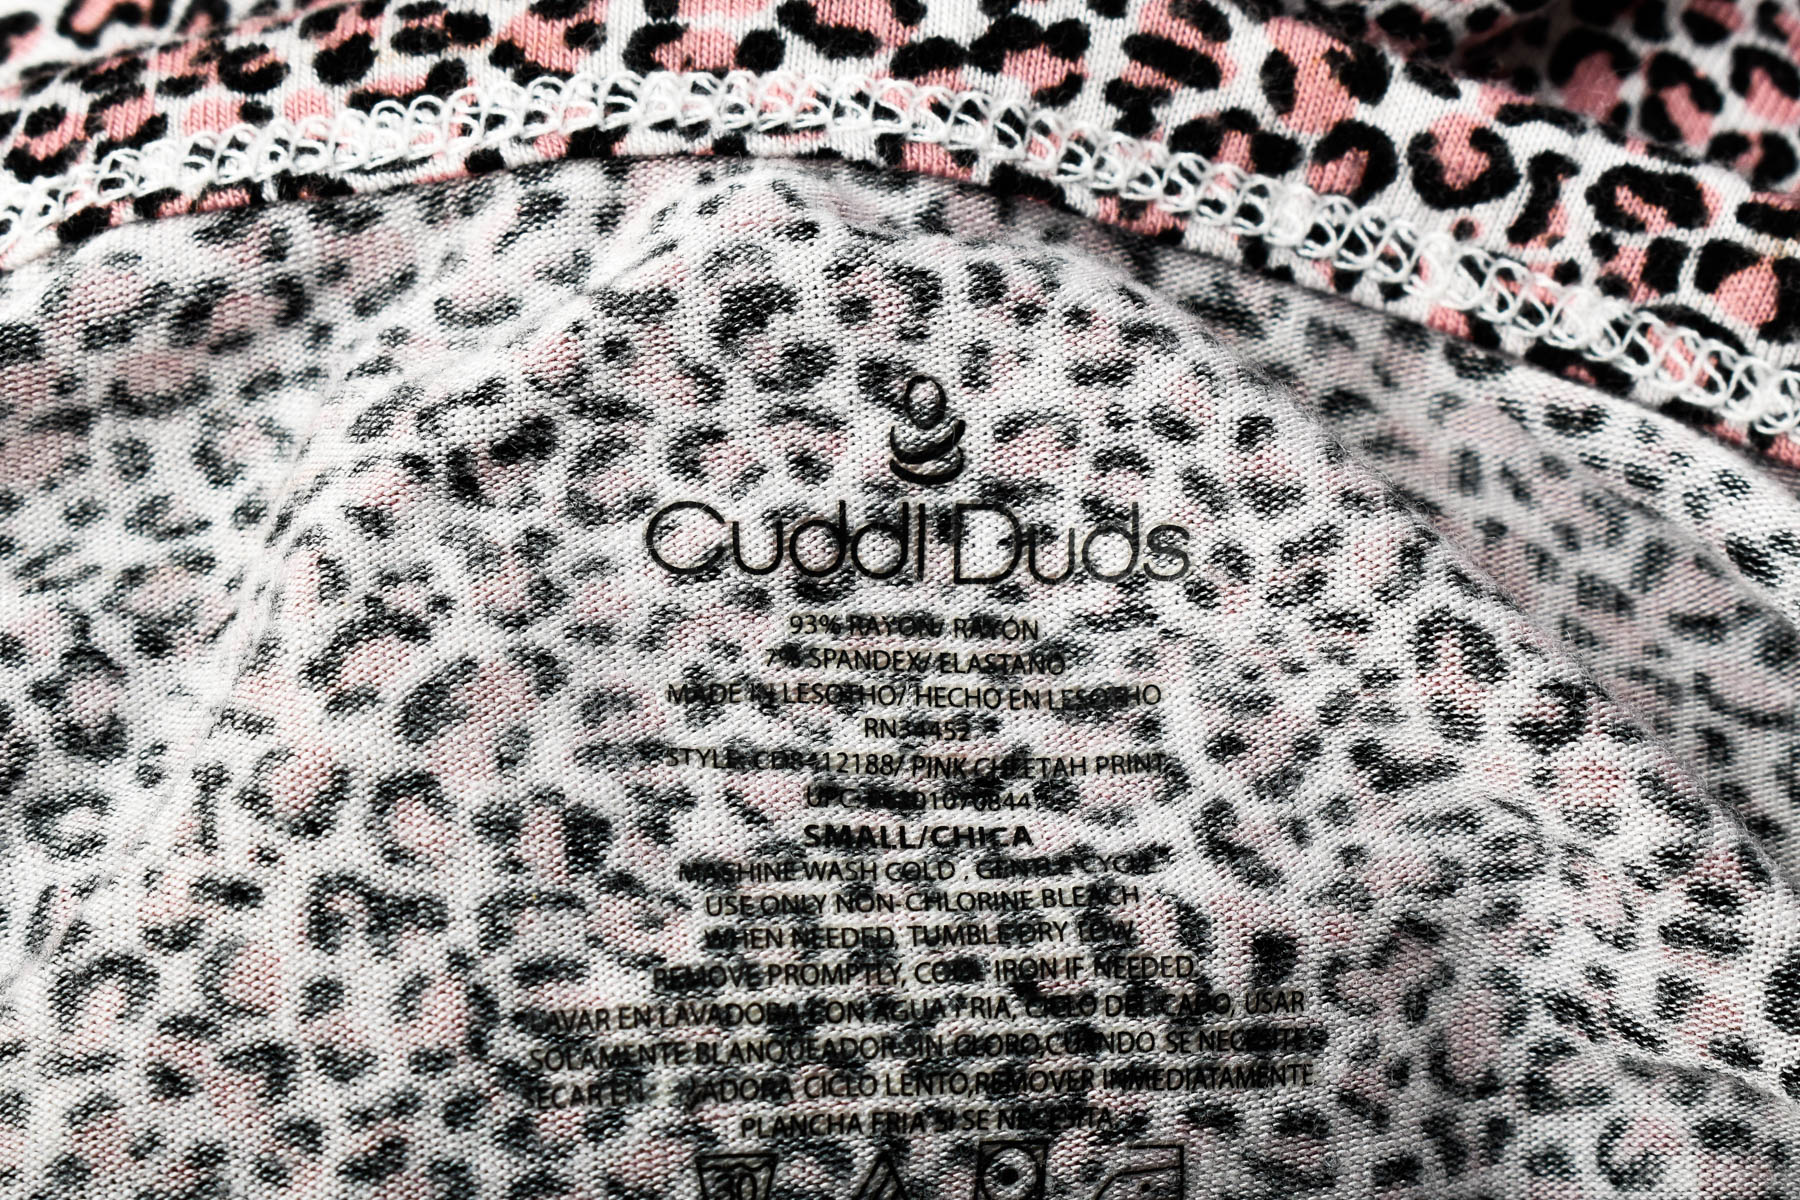 Women's blouse - Cuddl Duds - 2